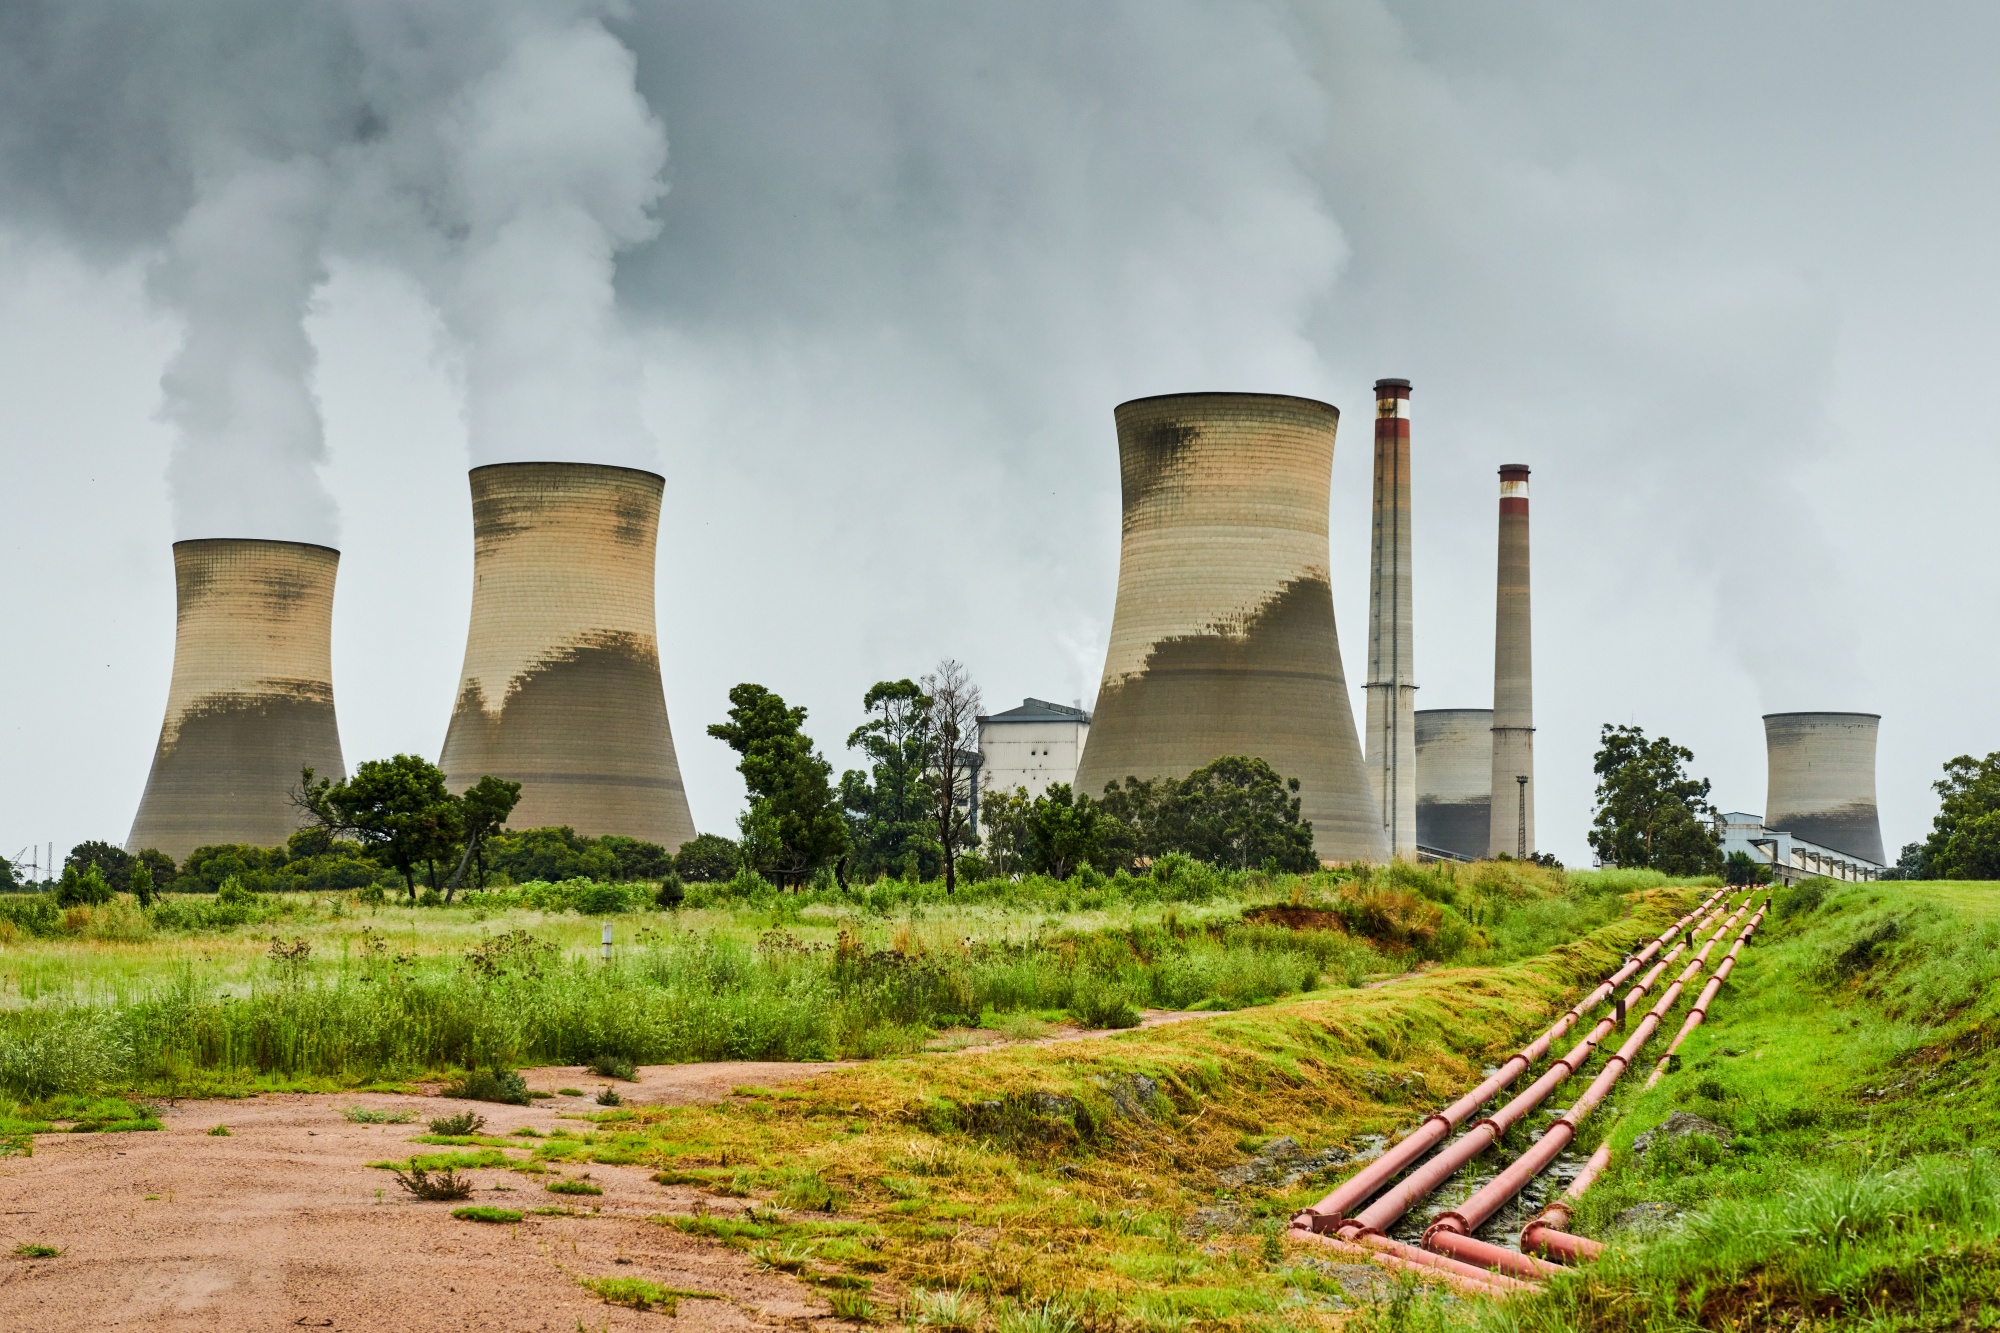 The Eskom Holdings SOC Ltd. Arnot coal-fired power station in Mpumalanga, South Africa.